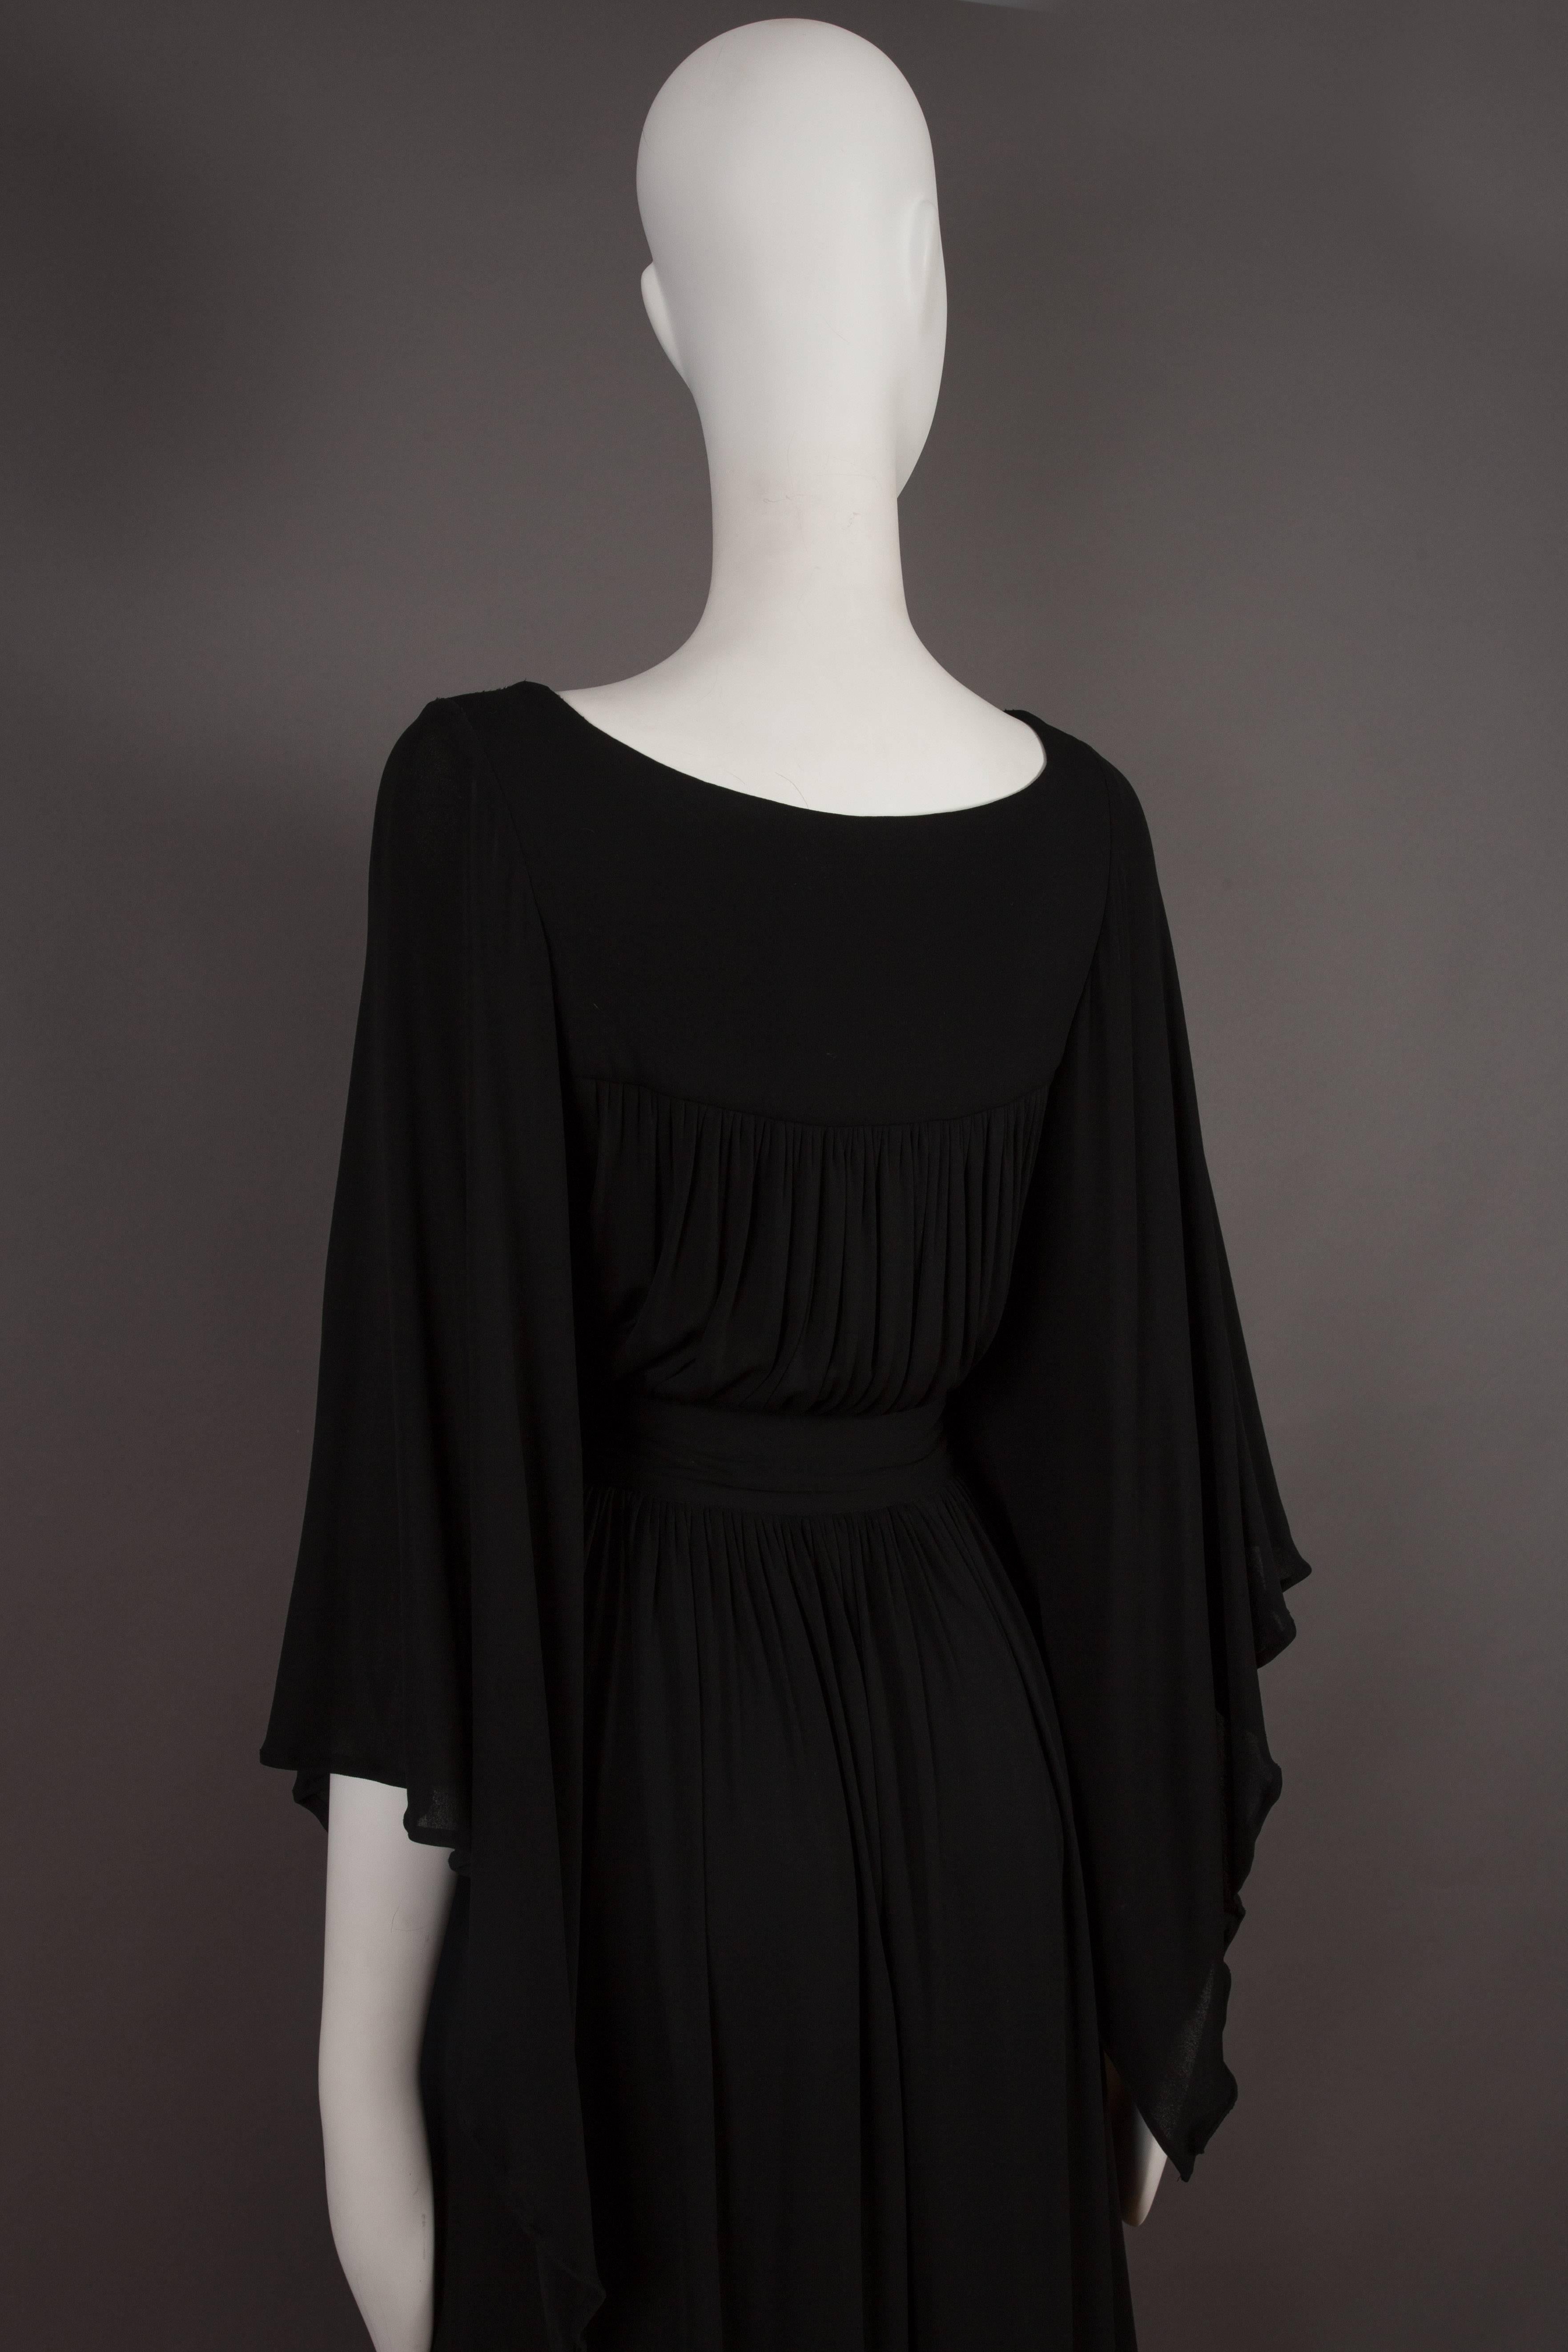 Women's Quorum by Ossie Clark pleated black jersey evening gown, circa 1965-68